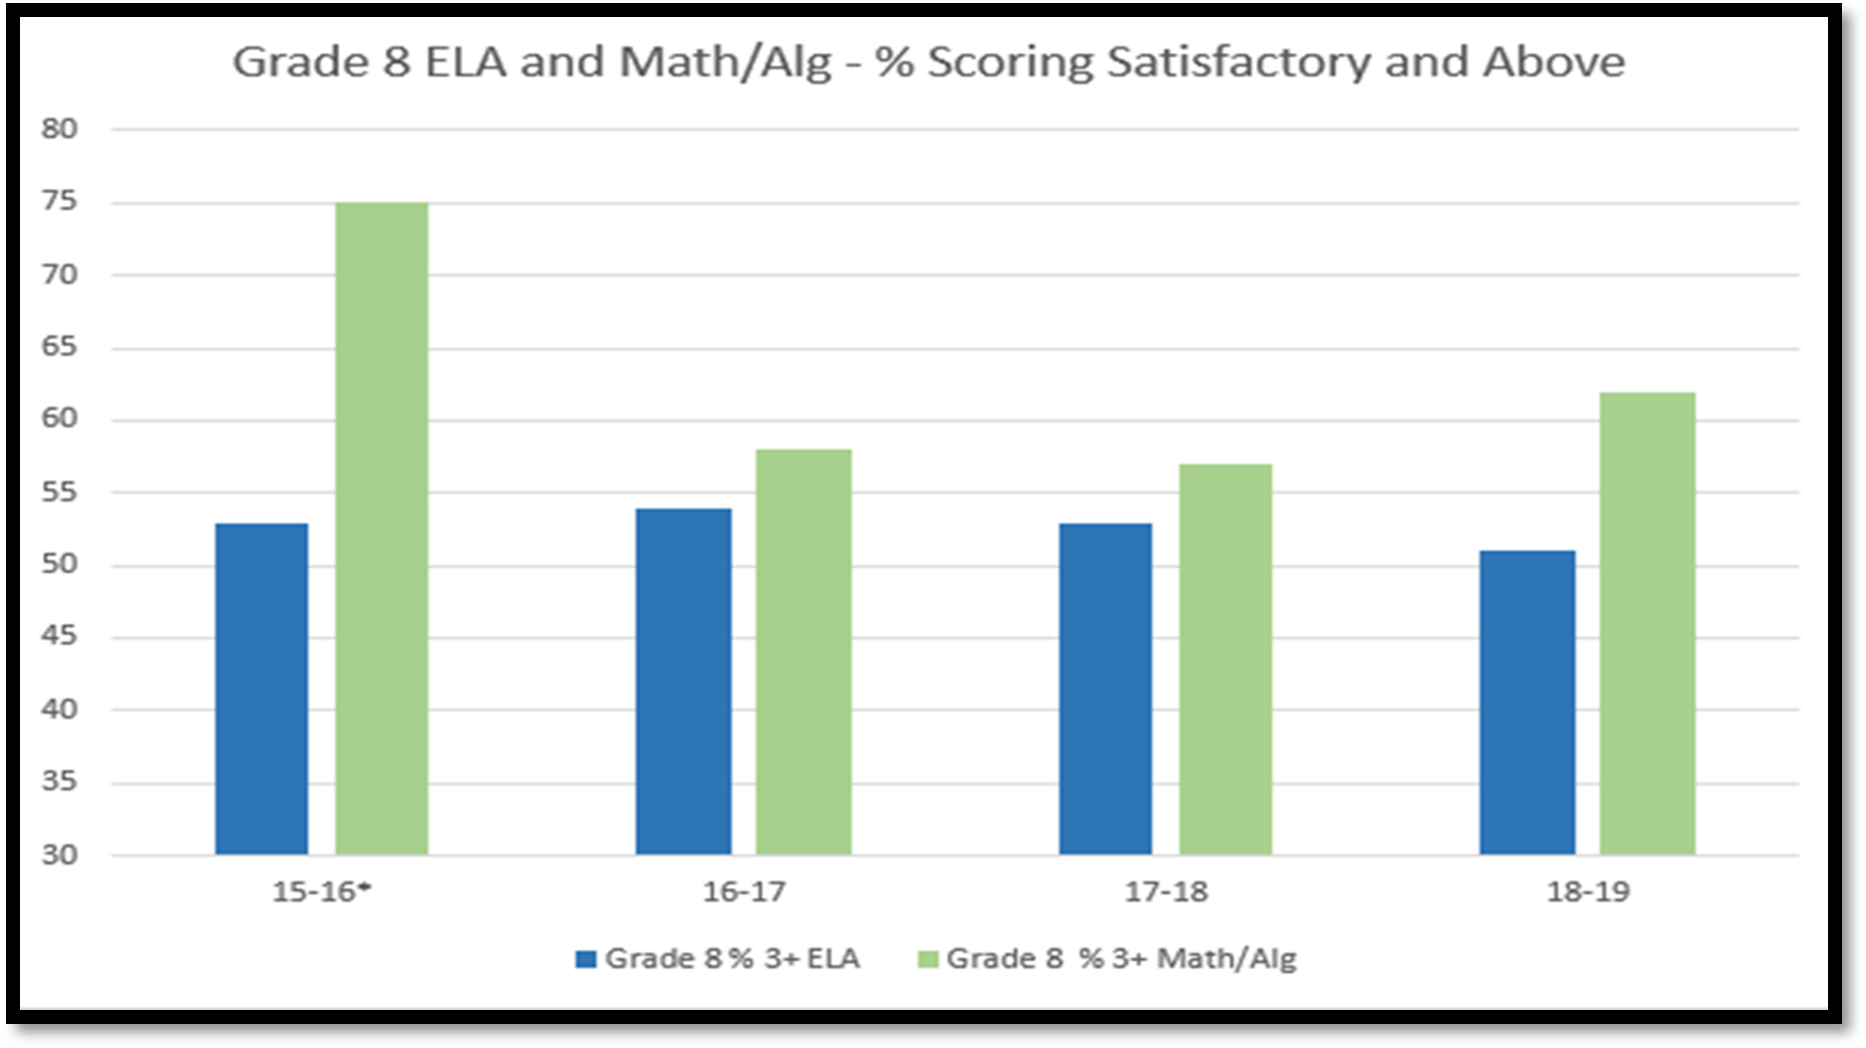 Grade 8 ELA and Math/Alg - % Scoring Satisfactory and Above